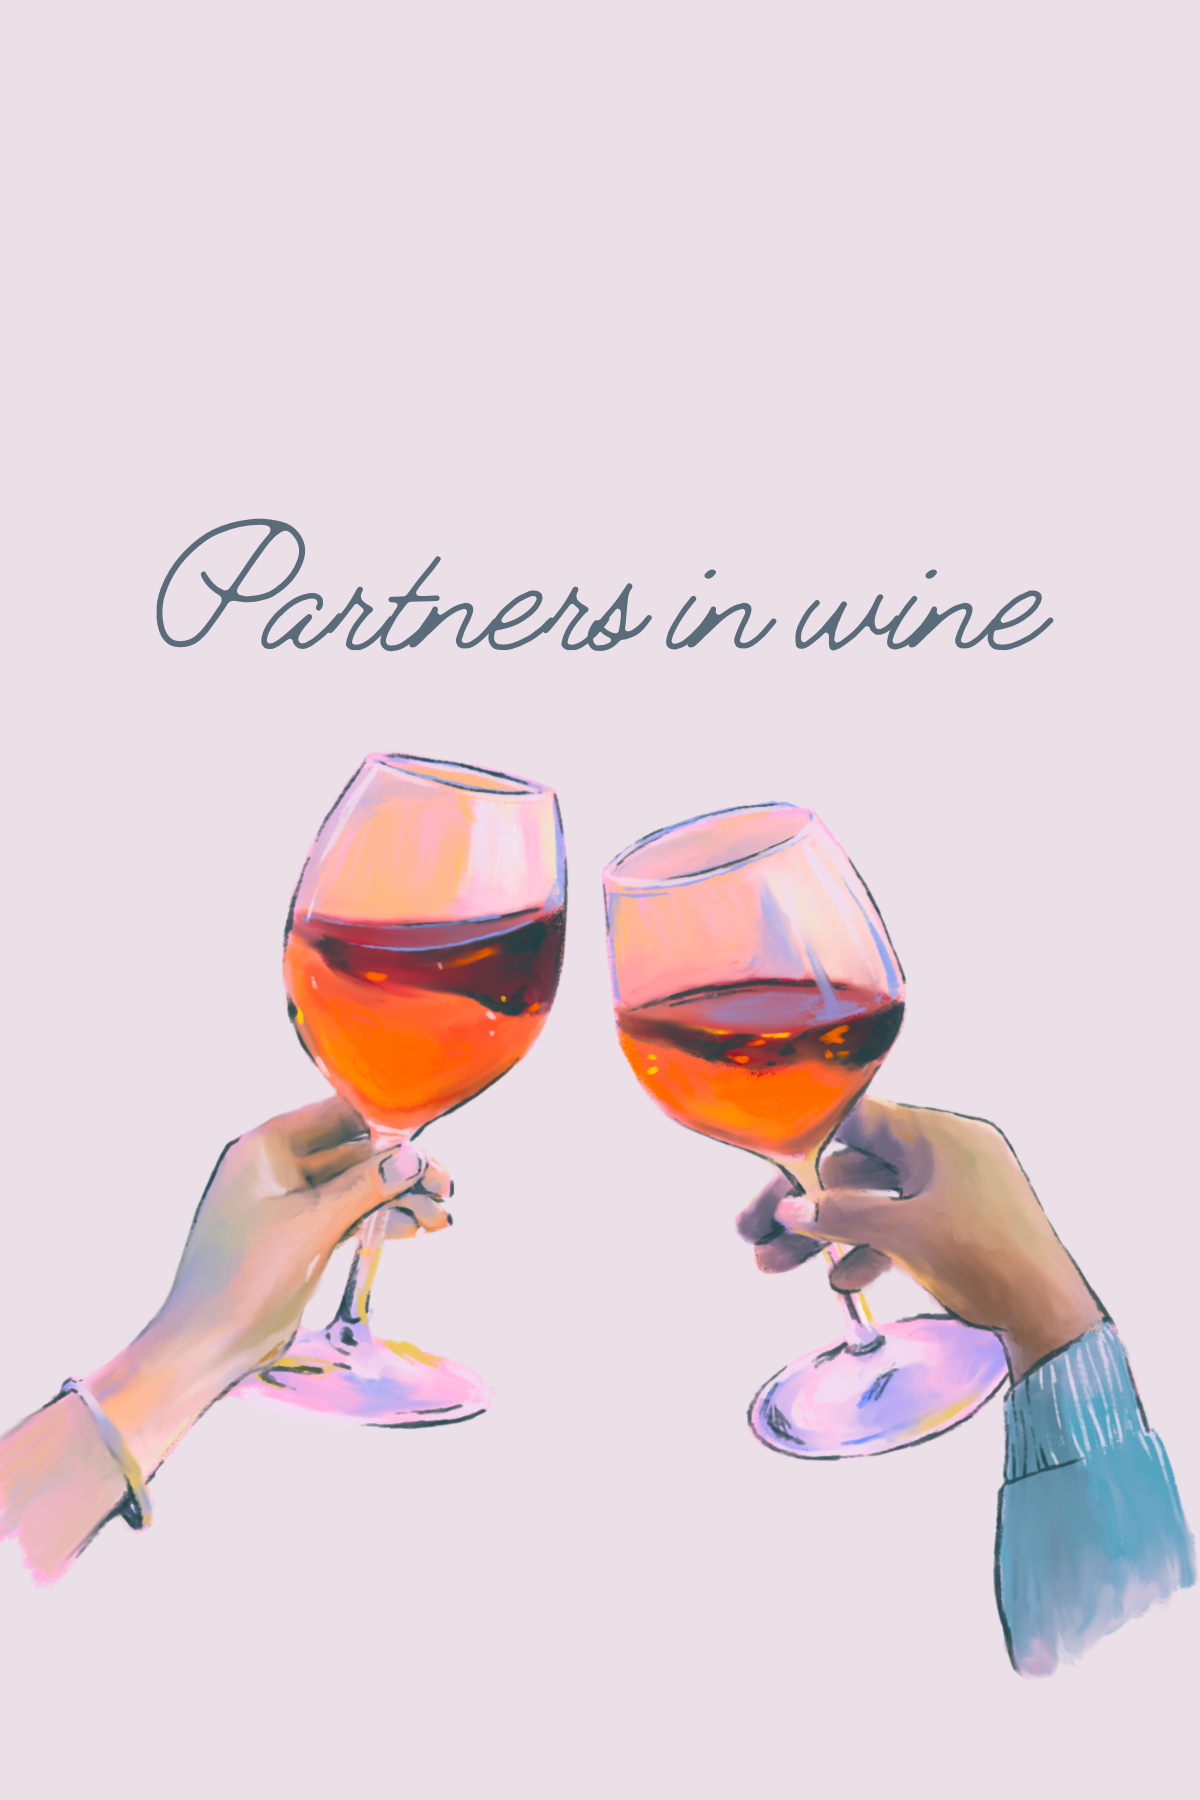 Birthday card - “partners in wine”